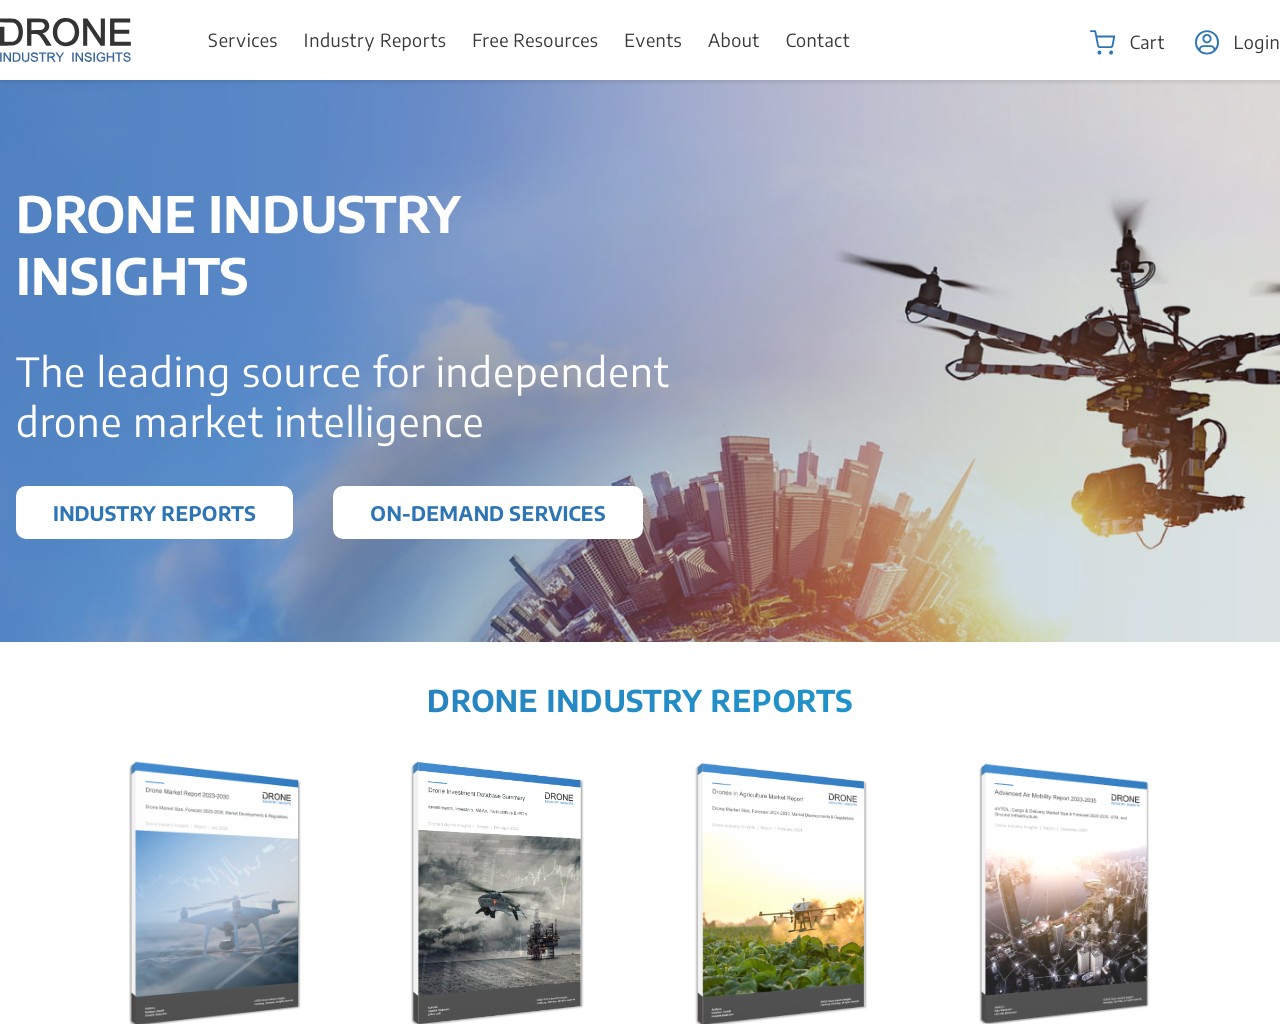 Картинка скриншота сайта - Drone Industry Insights - сайт, посвященный новостям, исследованиям и тенденциям в области дронов